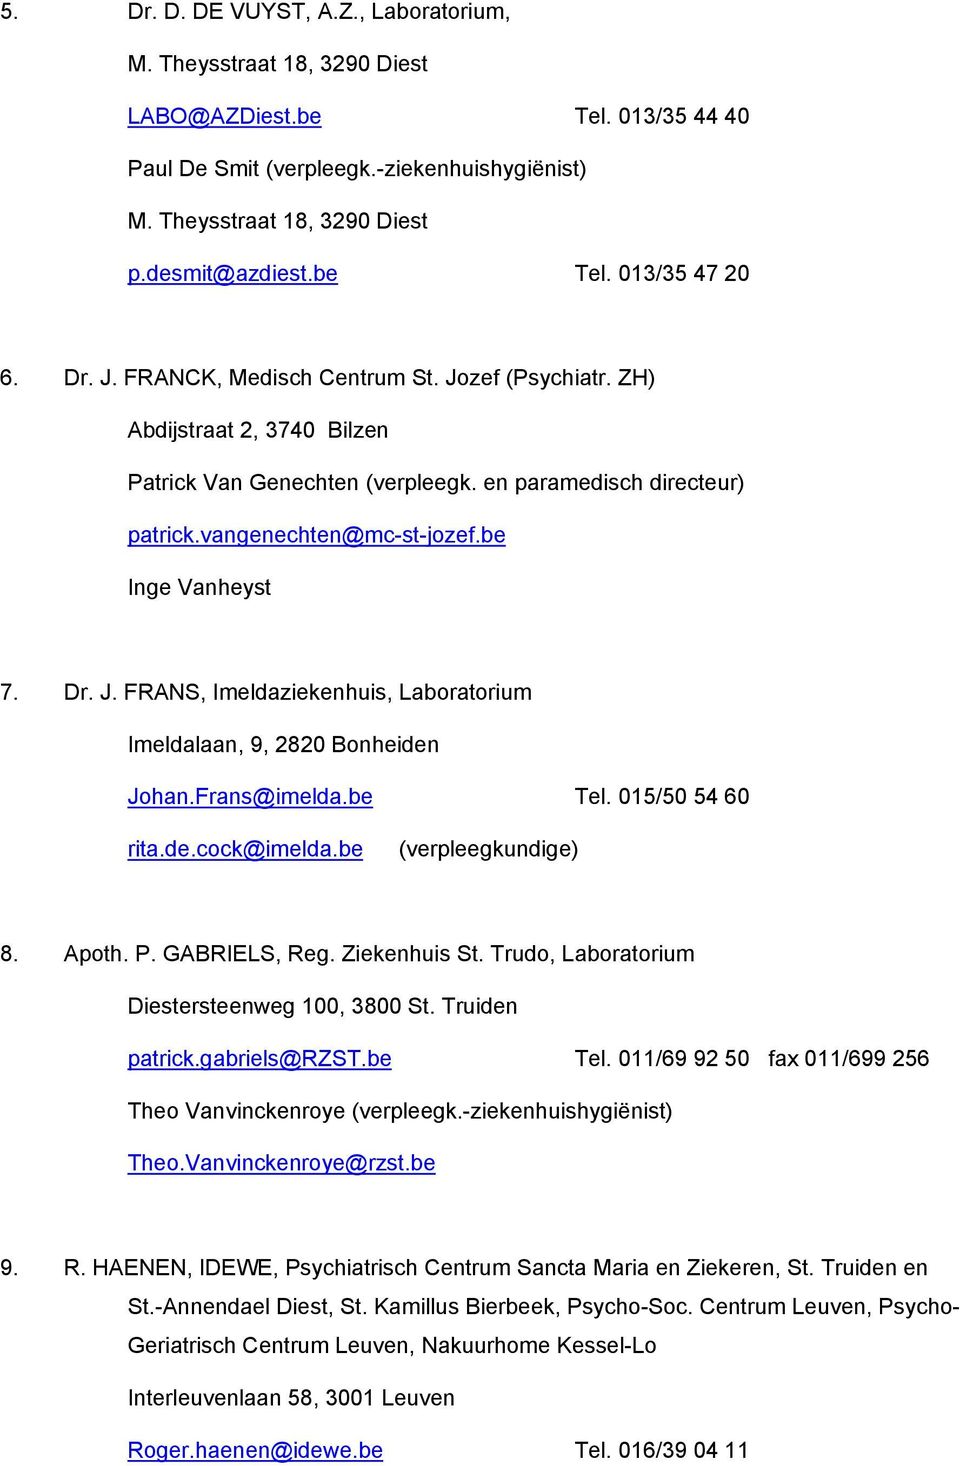 vangenechten@mc-st-jozef.be Inge Vanheyst 7. Dr. J. FRANS, Imeldaziekenhuis, Laboratorium Imeldalaan, 9, 2820 Bonheiden Johan.Frans@imelda.be Tel. 015/50 54 60 rita.de.cock@imelda.